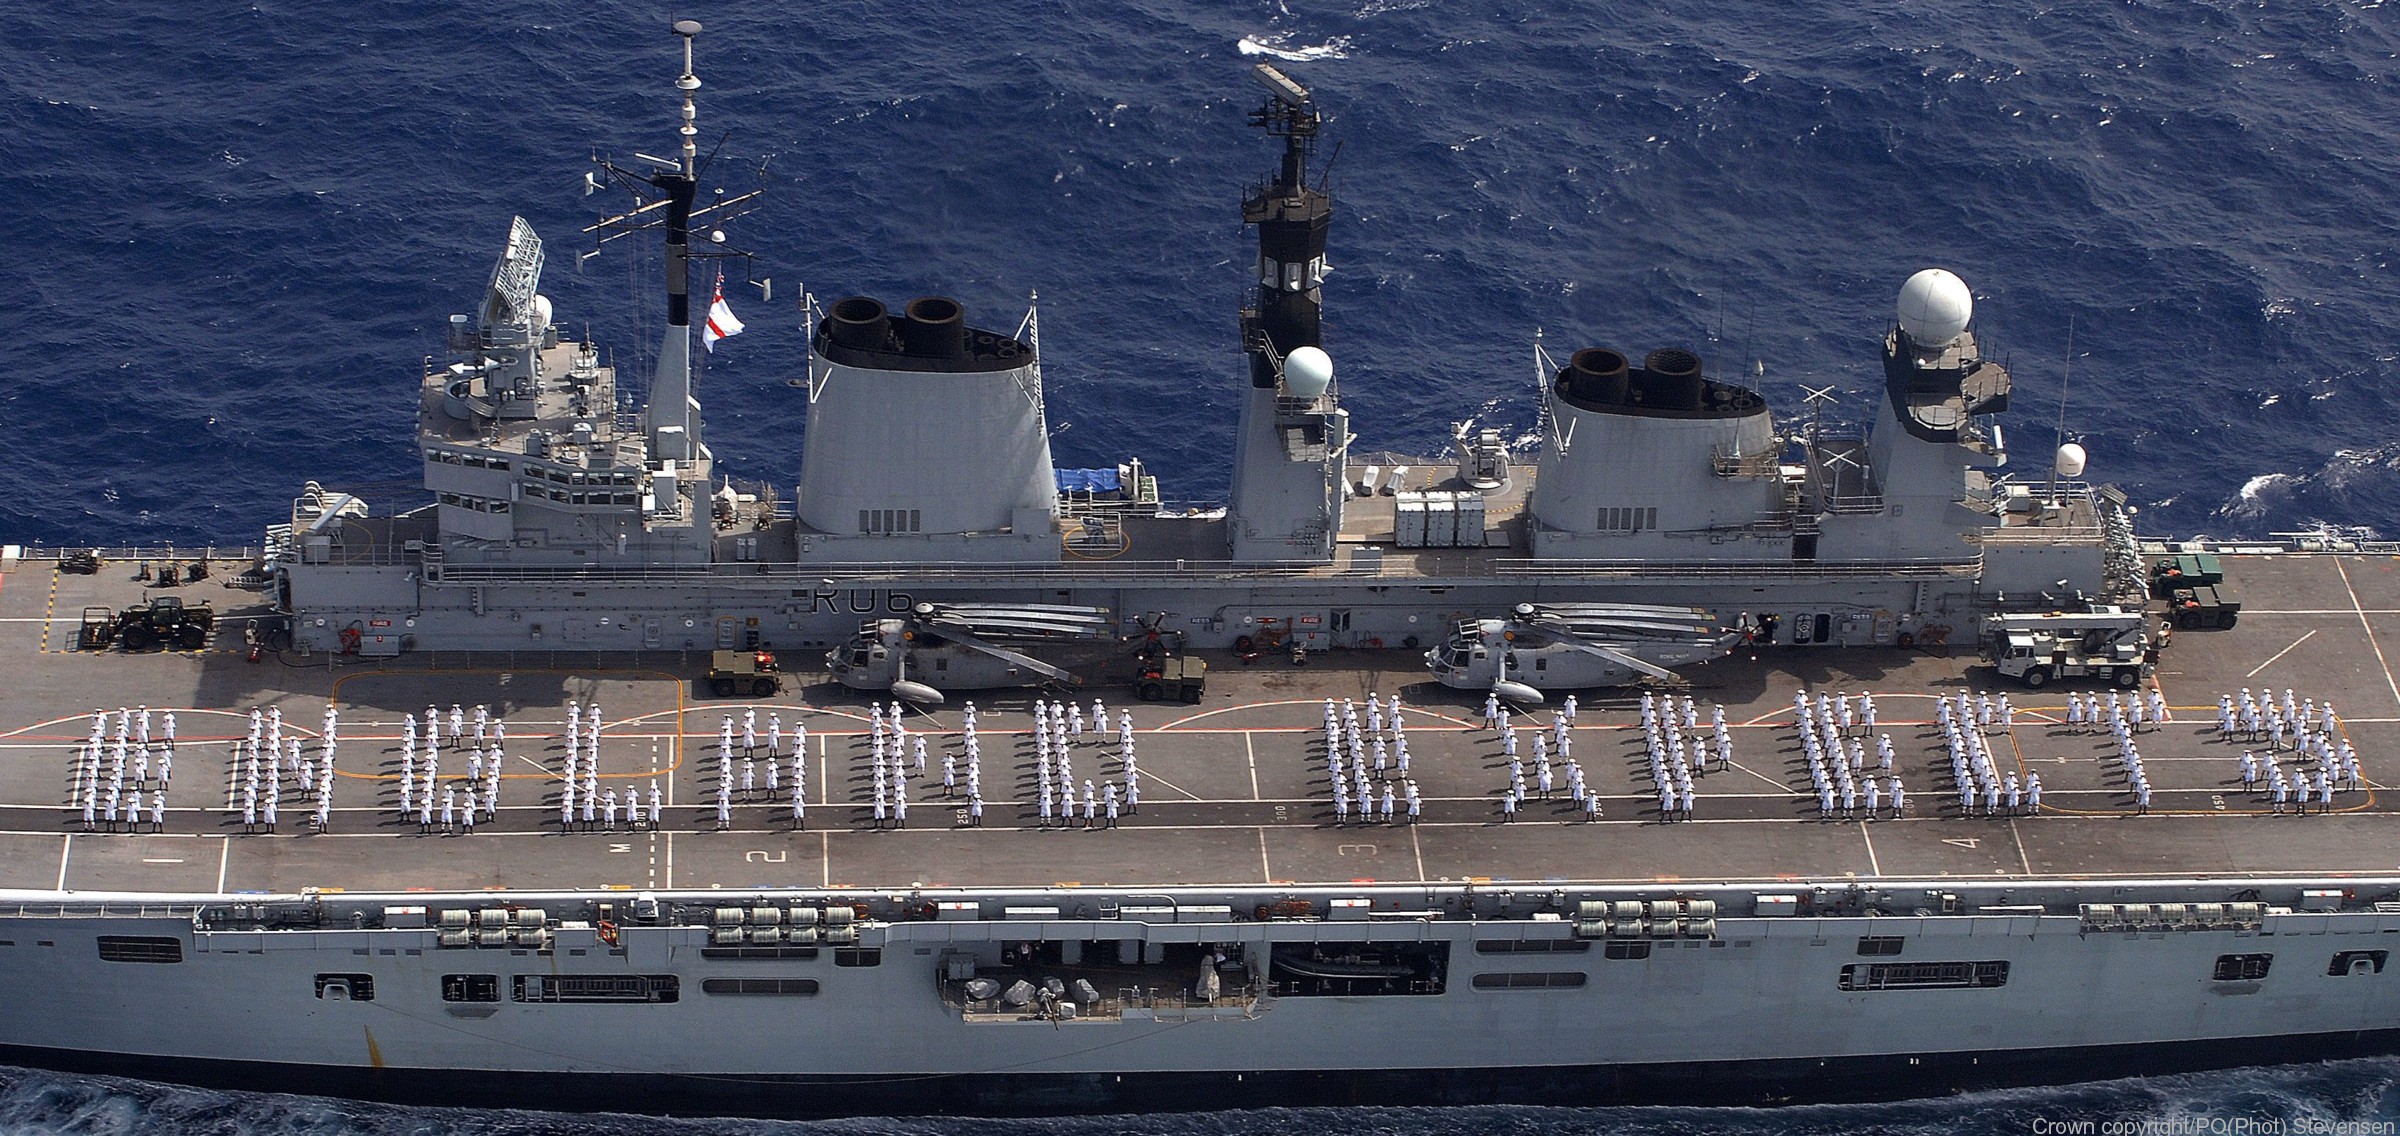 r-06 hms illustrious invincible class aircraft carrier royal navy 13